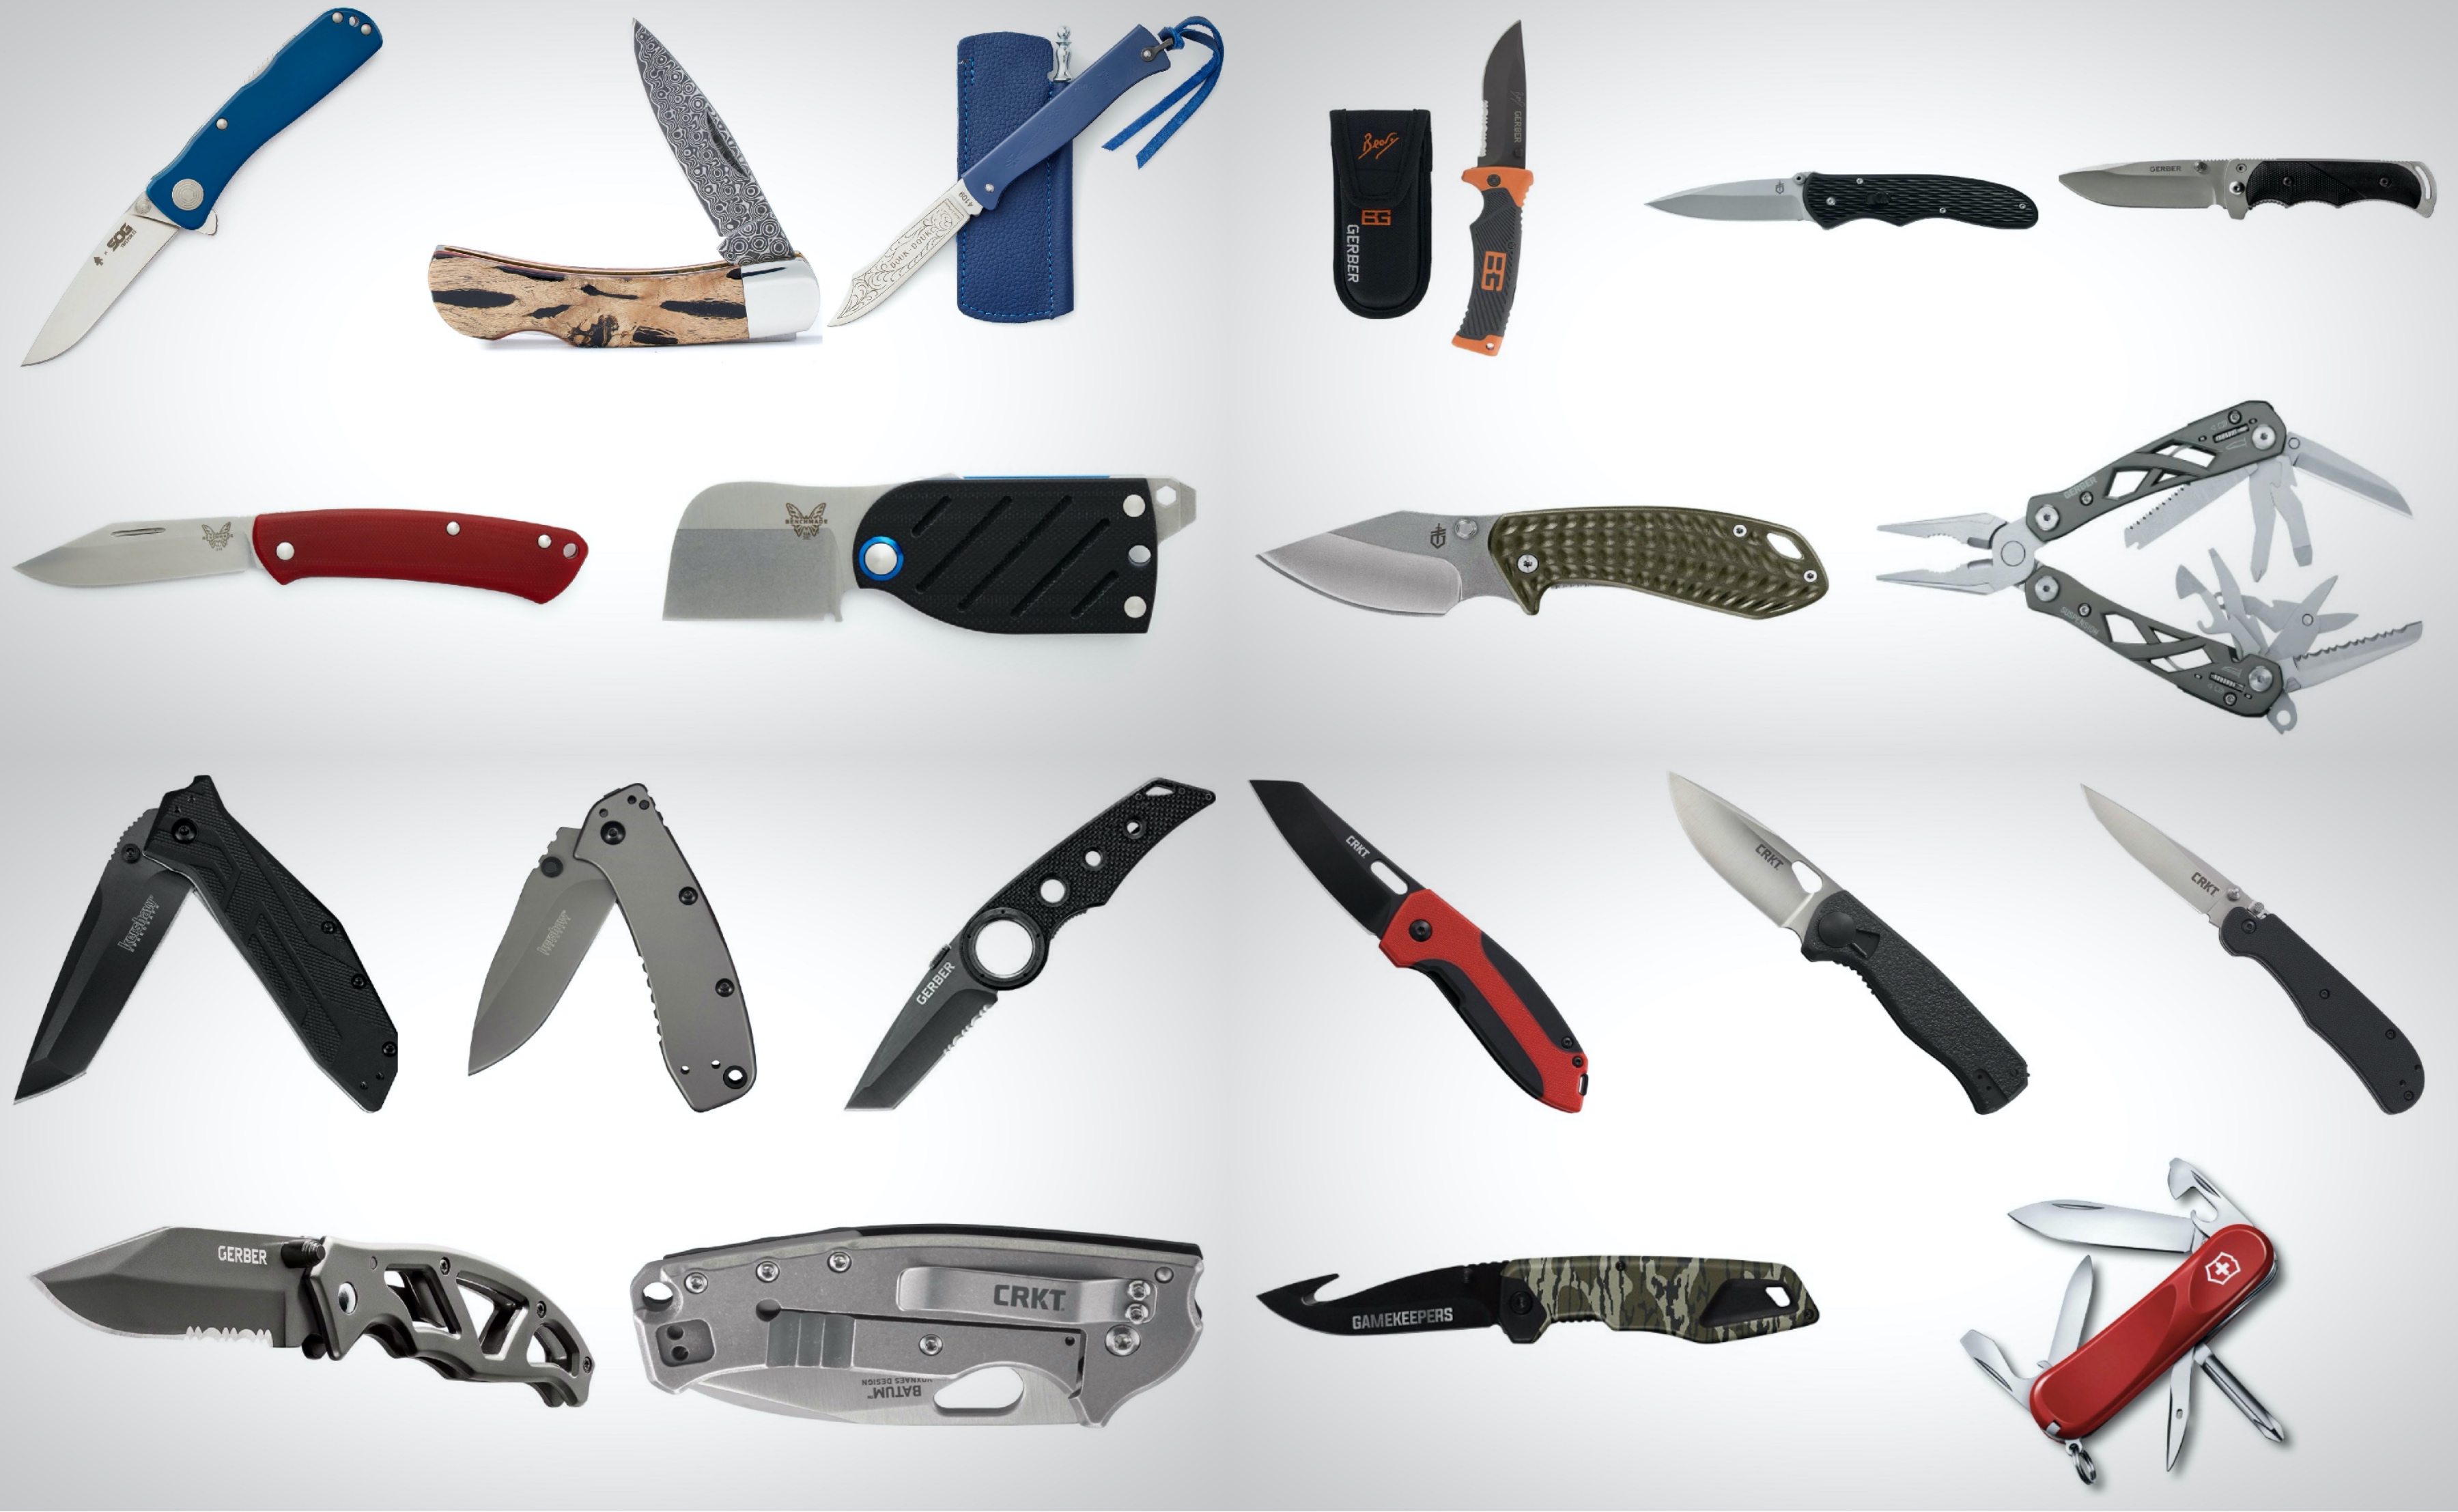 https://brobible.com/wp-content/uploads/2019/12/20-best-cyber-monday-deals-pocket-knives-everyday-carry.jpg